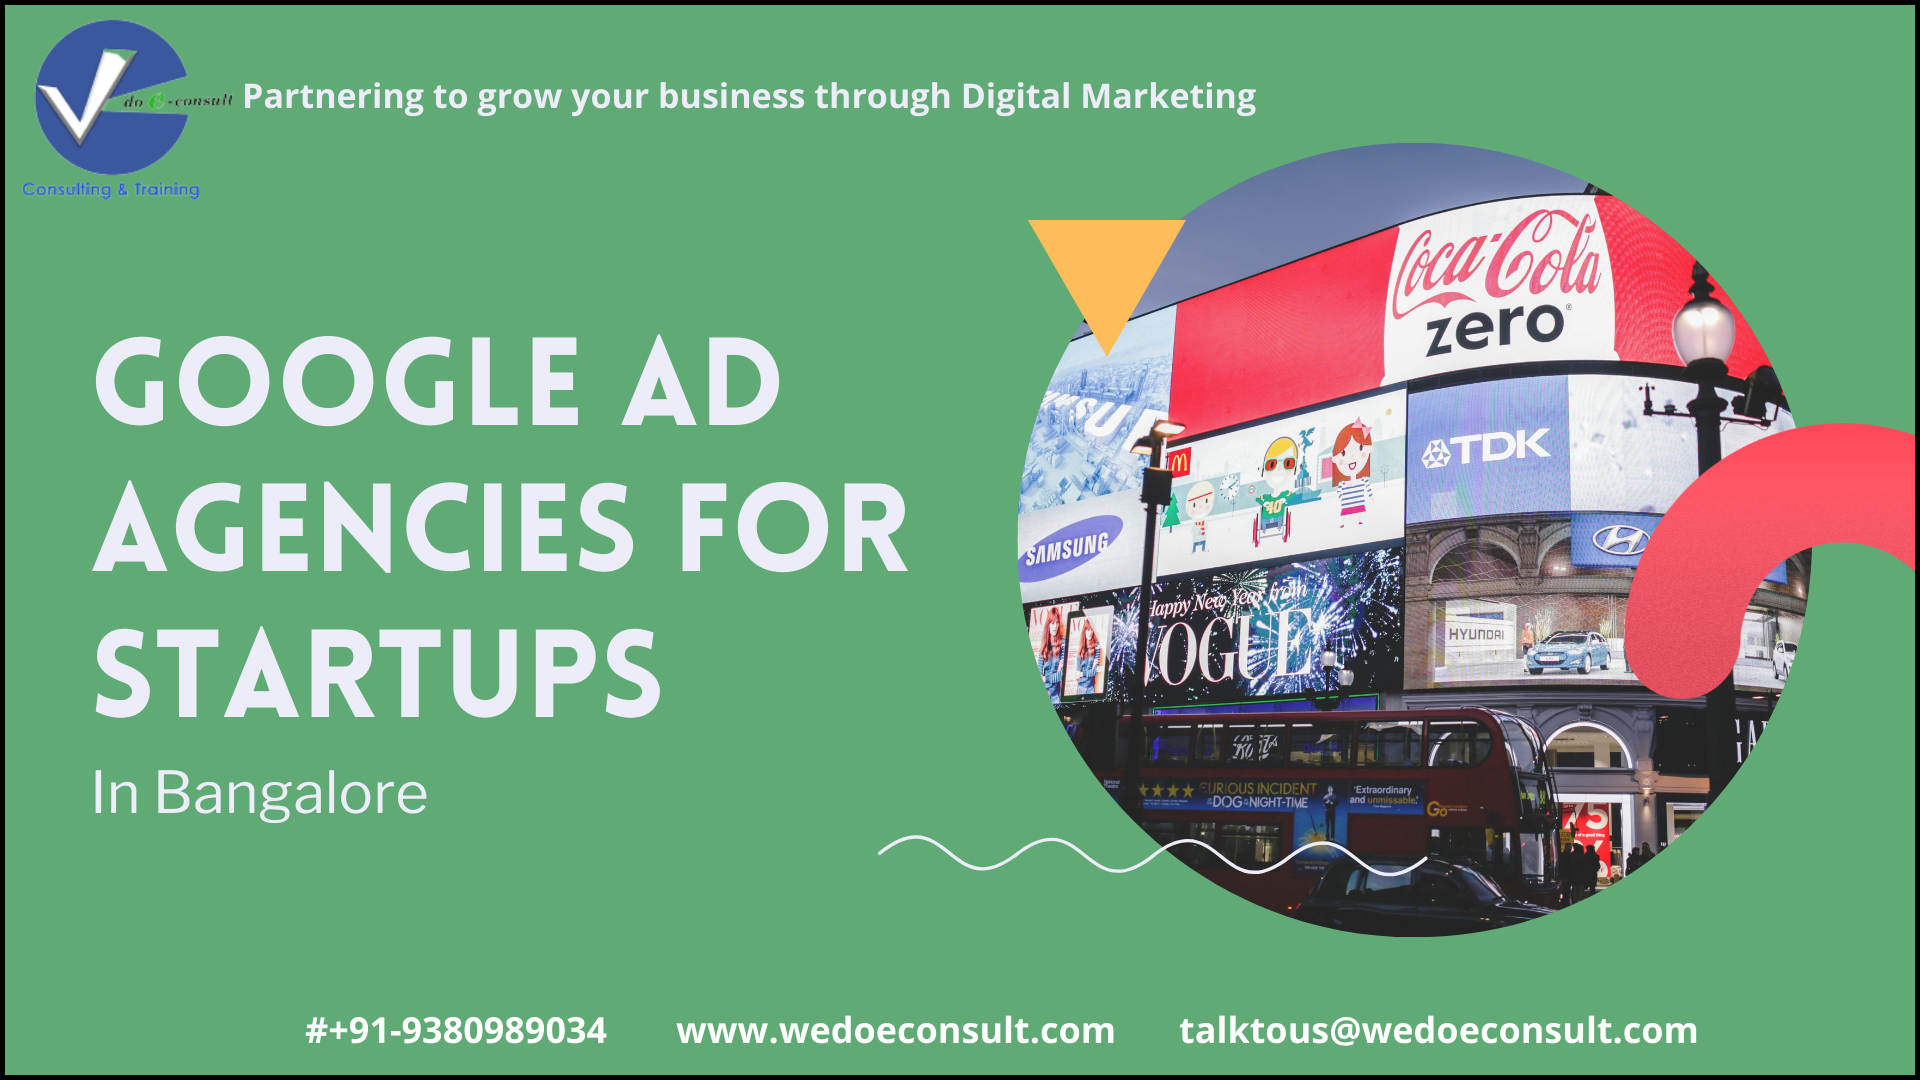 Google ad agencies in Bangalore